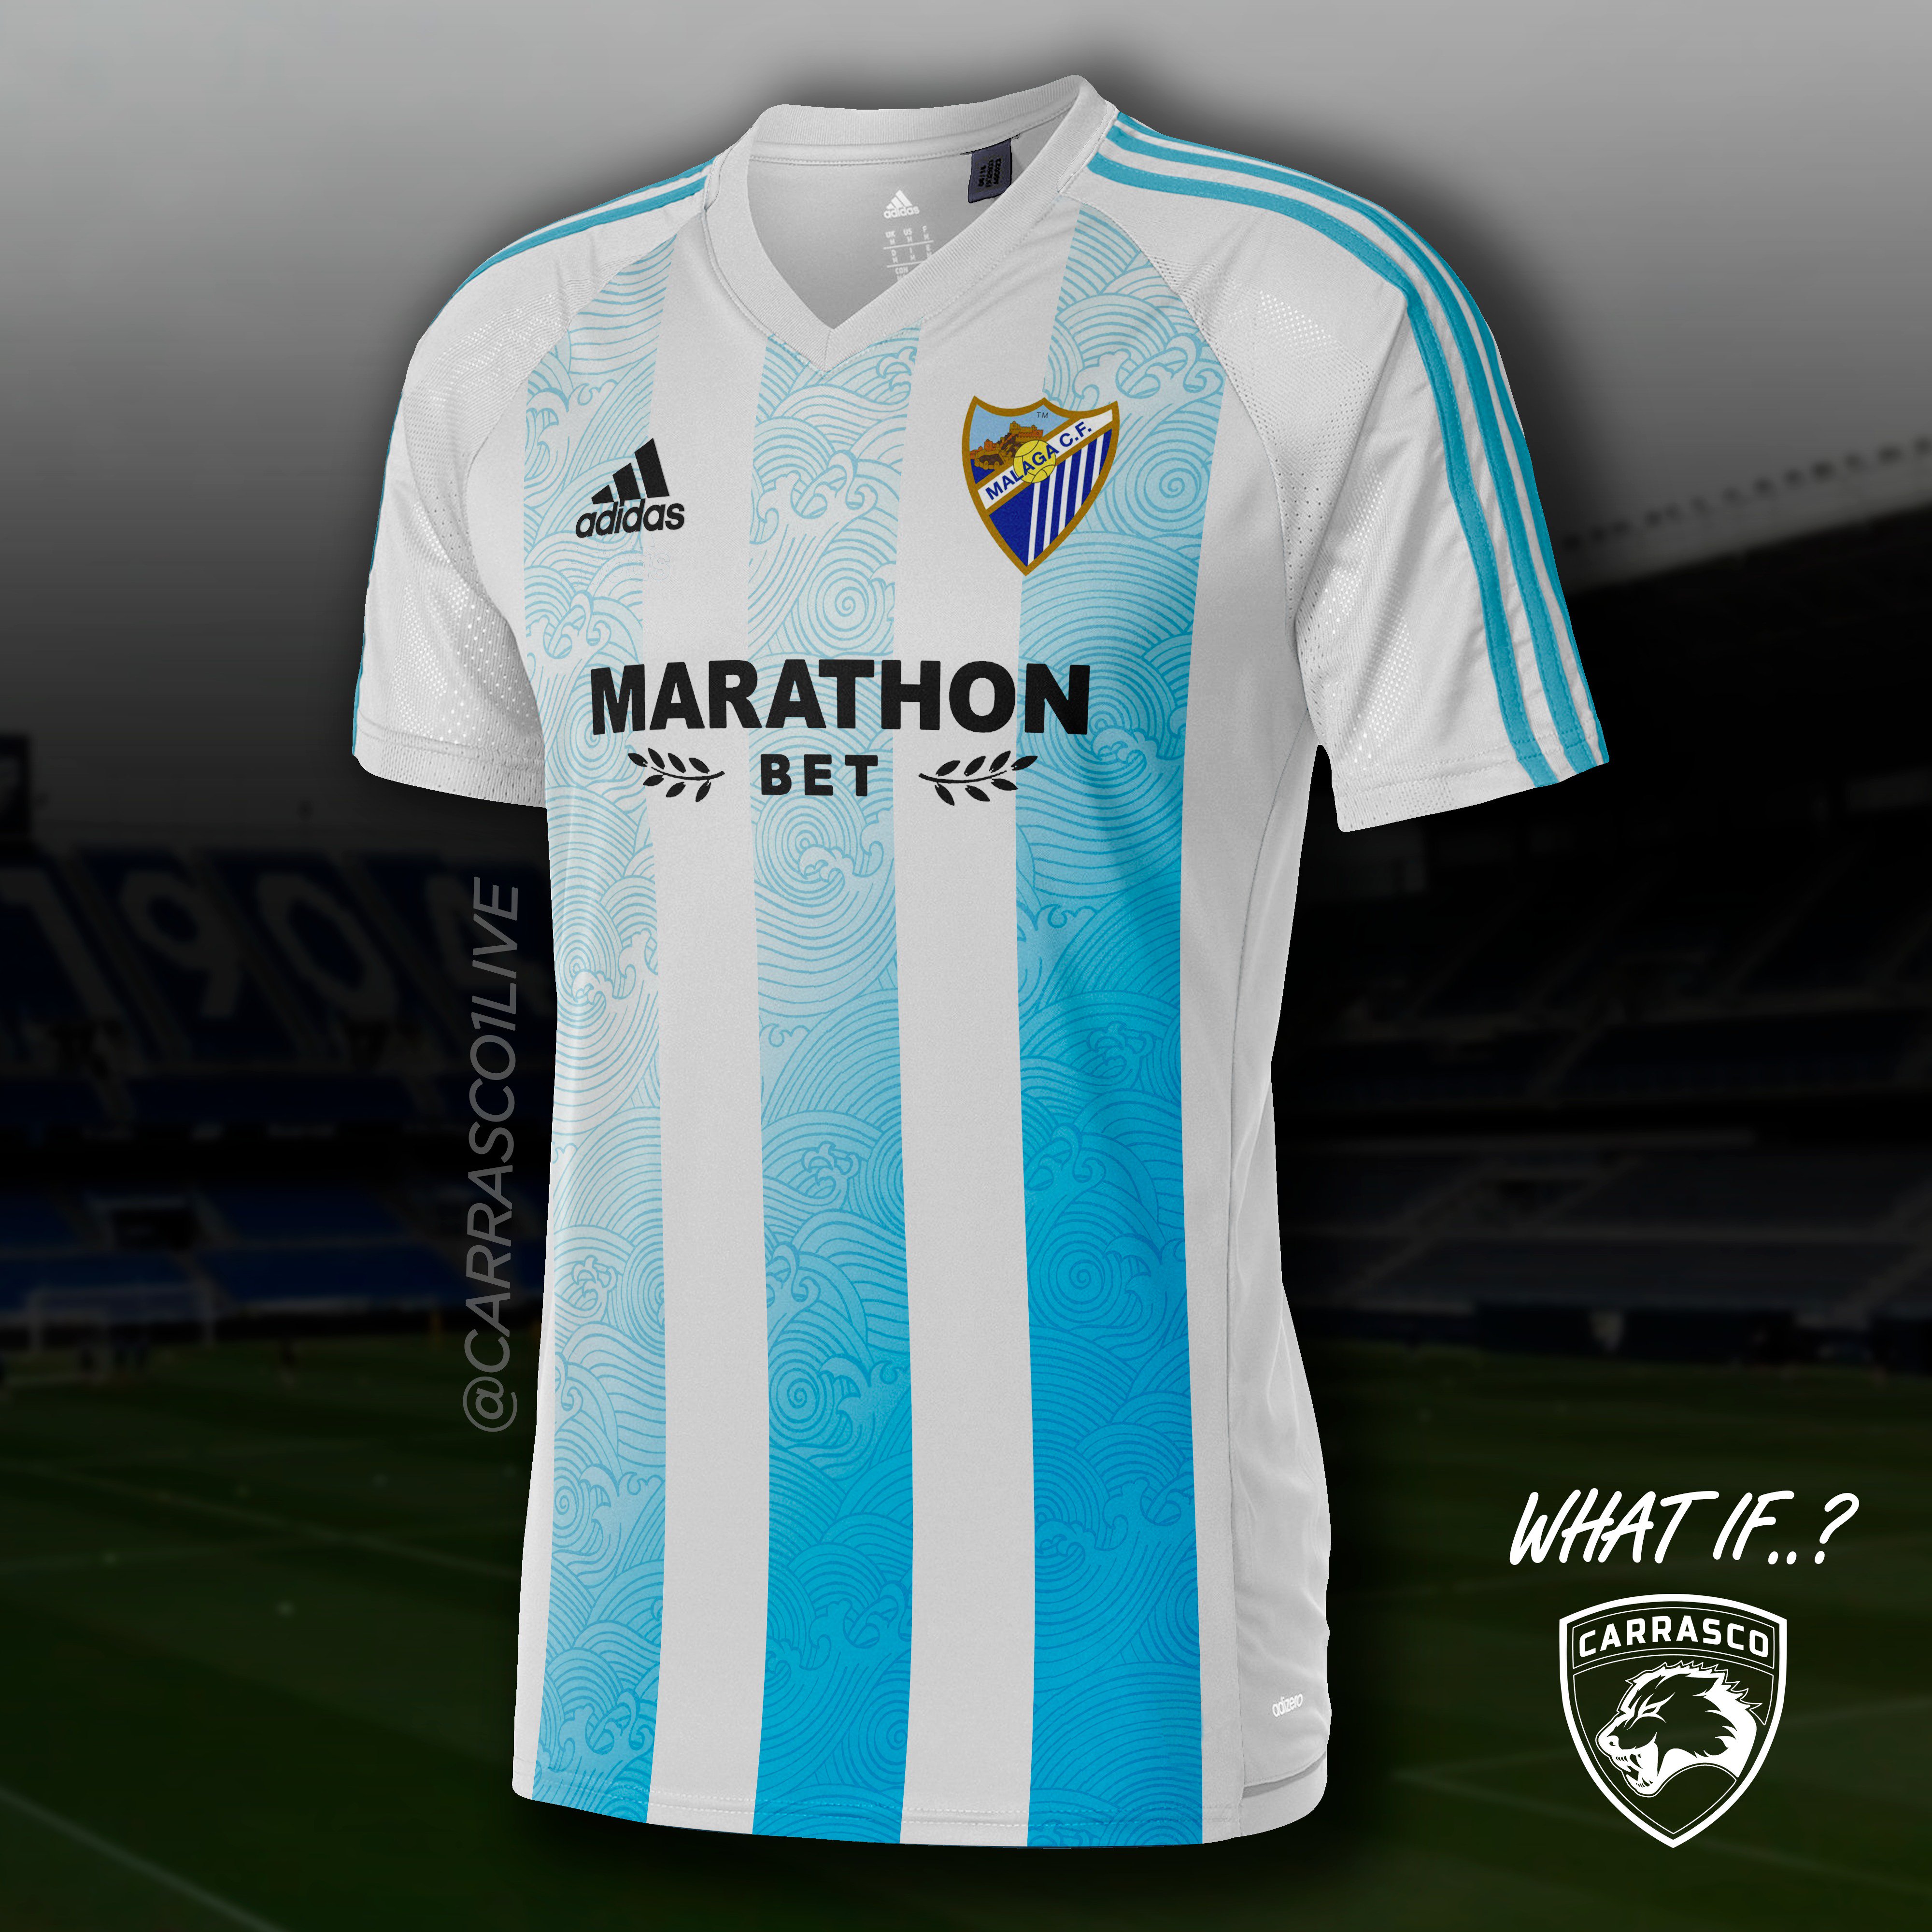 José Carrasco on Twitter: "Comienzo mi serie What if...? La Liga: Nike➡Adidas Málaga Adidas Concept https://t.co/LU3HbOZmq4 … Mockup by @casakeros https://t.co/c4iC2EWPVs" / Twitter